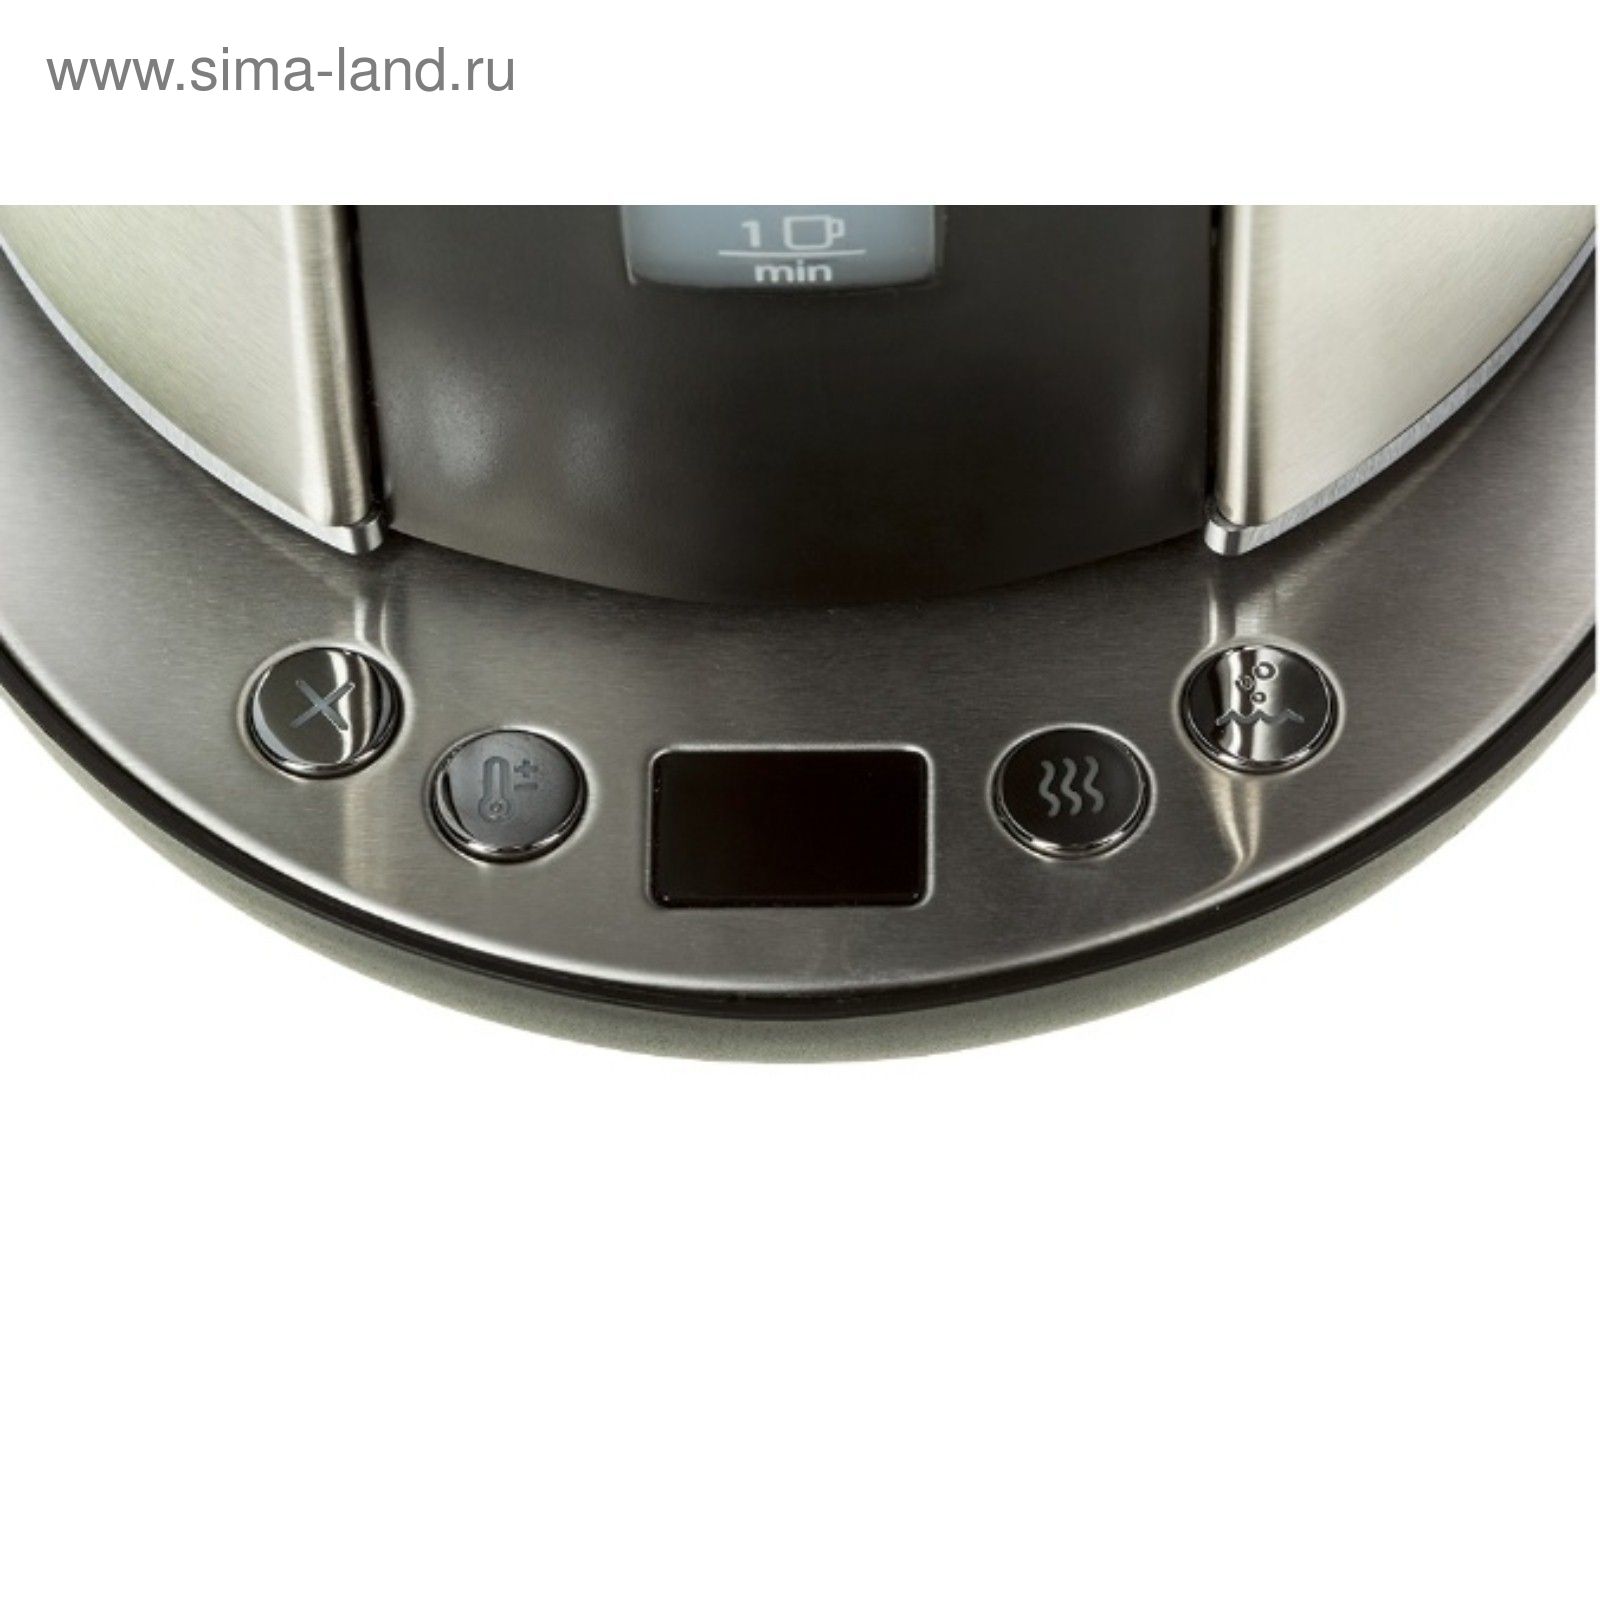 Чайник электрический Hotpoint-Ariston WK 24E UP0 (F095678) - купить чайник электрический WK 24E UP0 (F095678) по выгодной цене в интернет-магазине